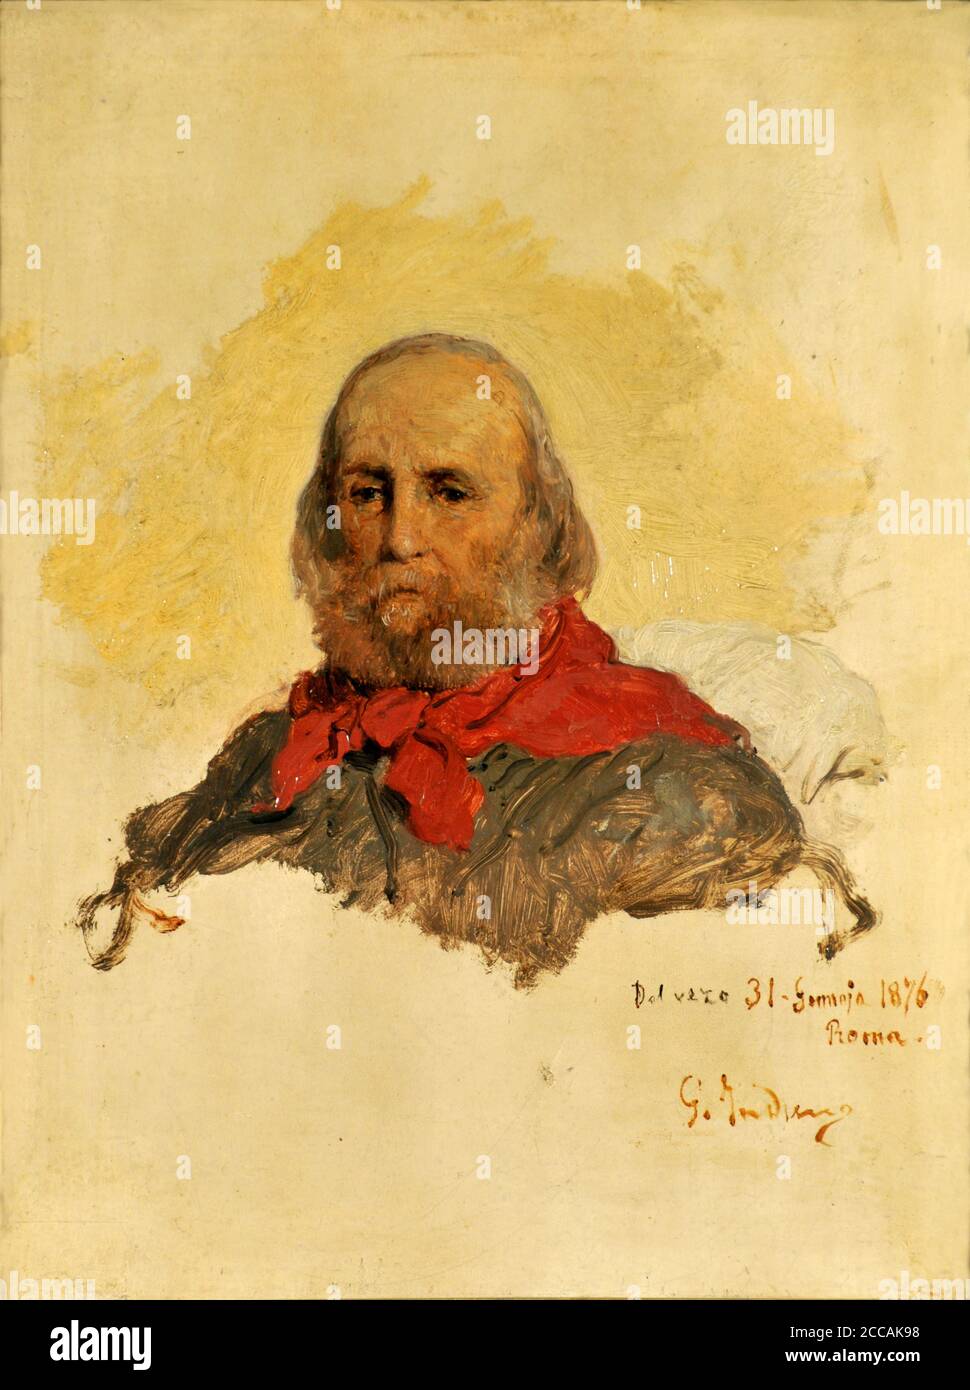 Portrait de Giuseppe Garibaldi (1807-1882). Musée : Galleria nazionale d'arte moderna Rome. Auteur: GEROLAMO INDUNO. Banque D'Images